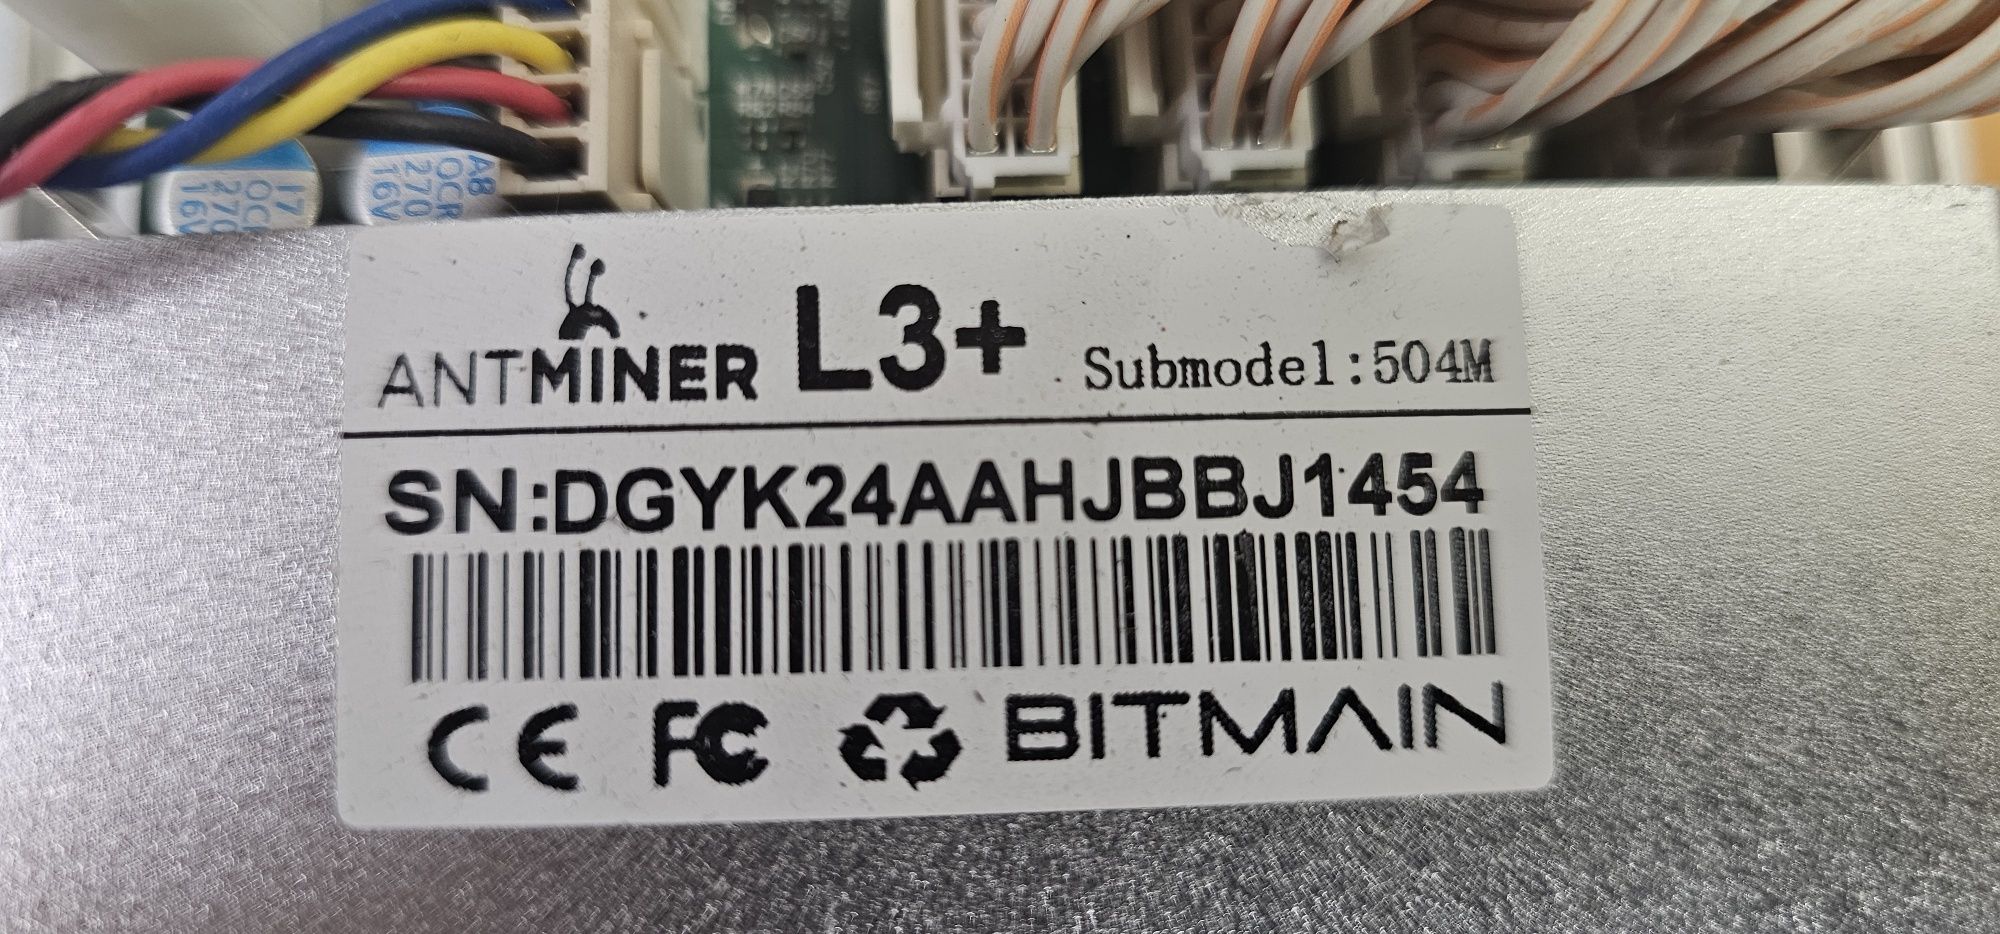 Bitmain Antminer L3+